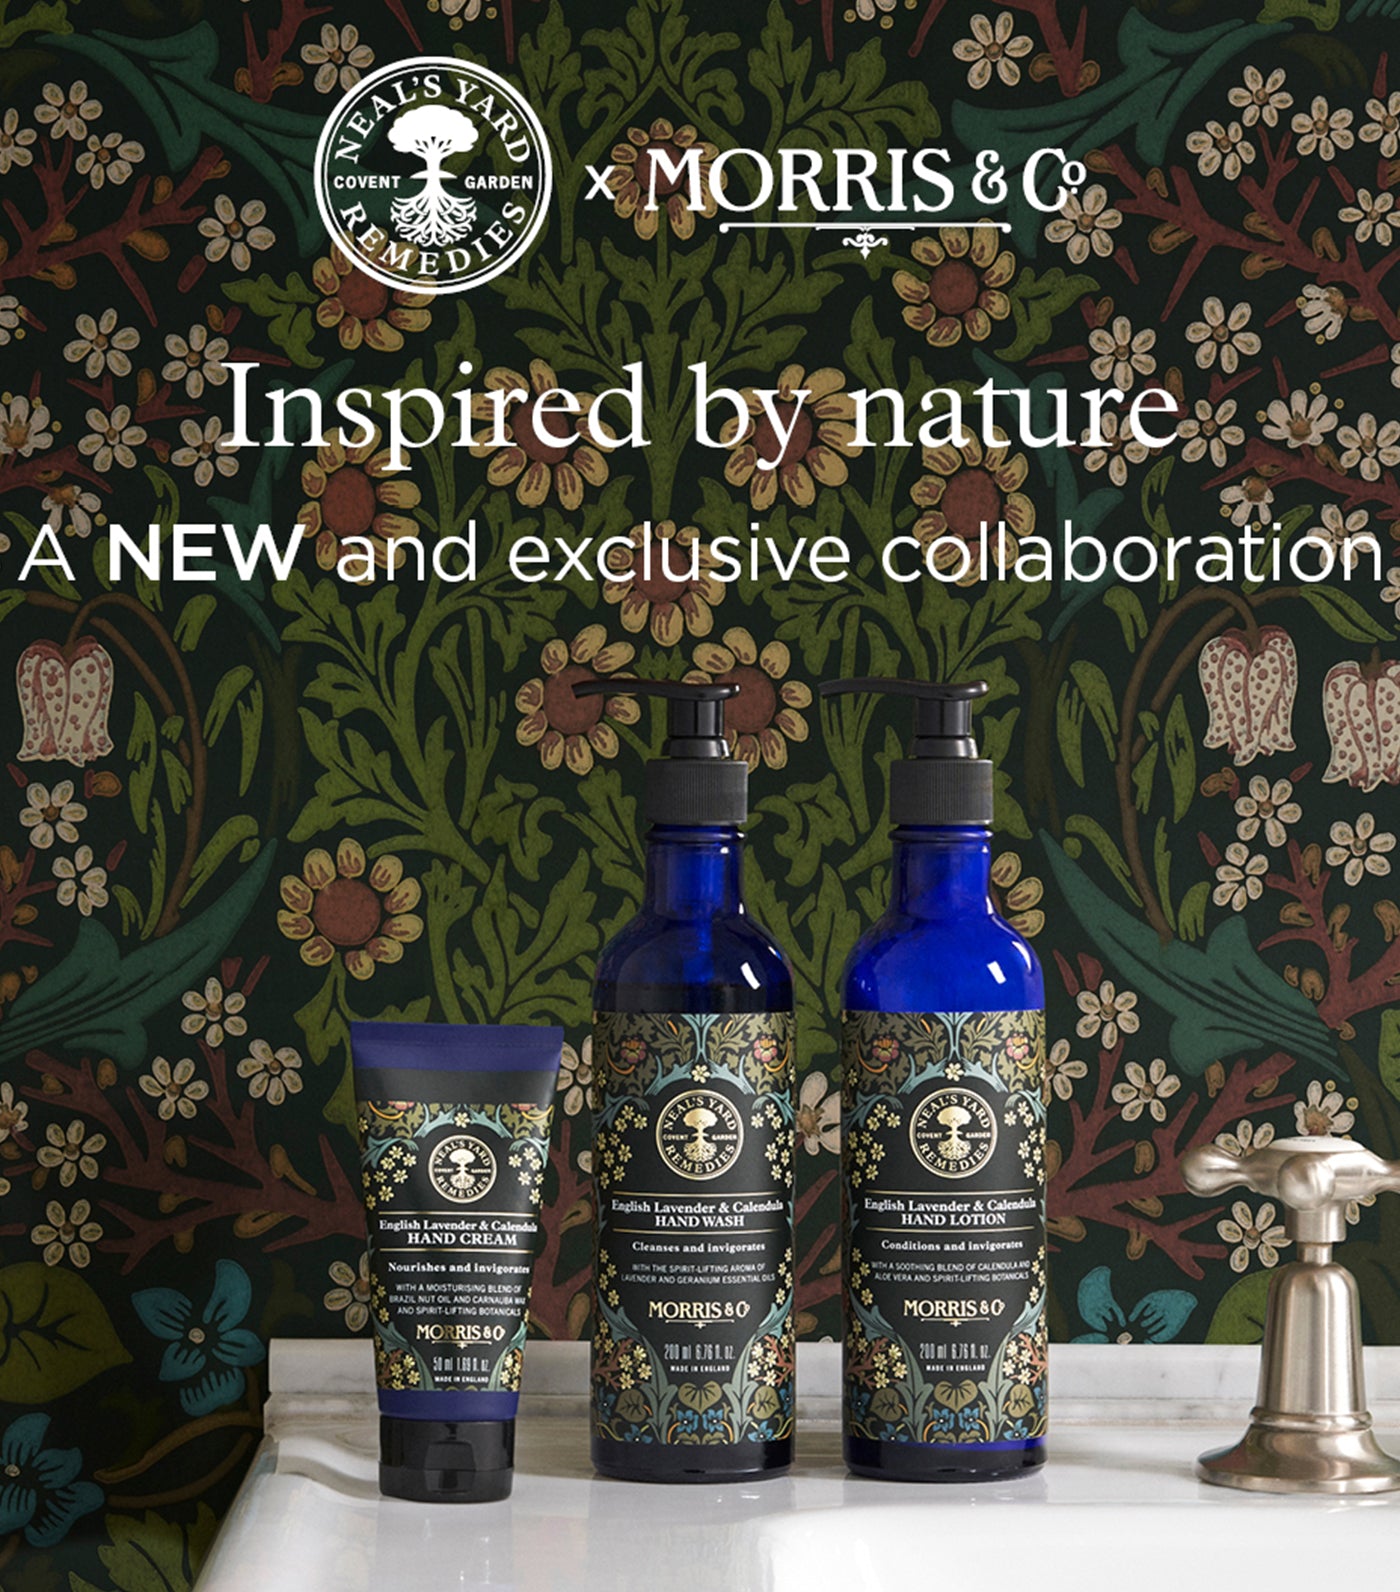 Morris & Co. English Lavender and Calendula Hand Wash